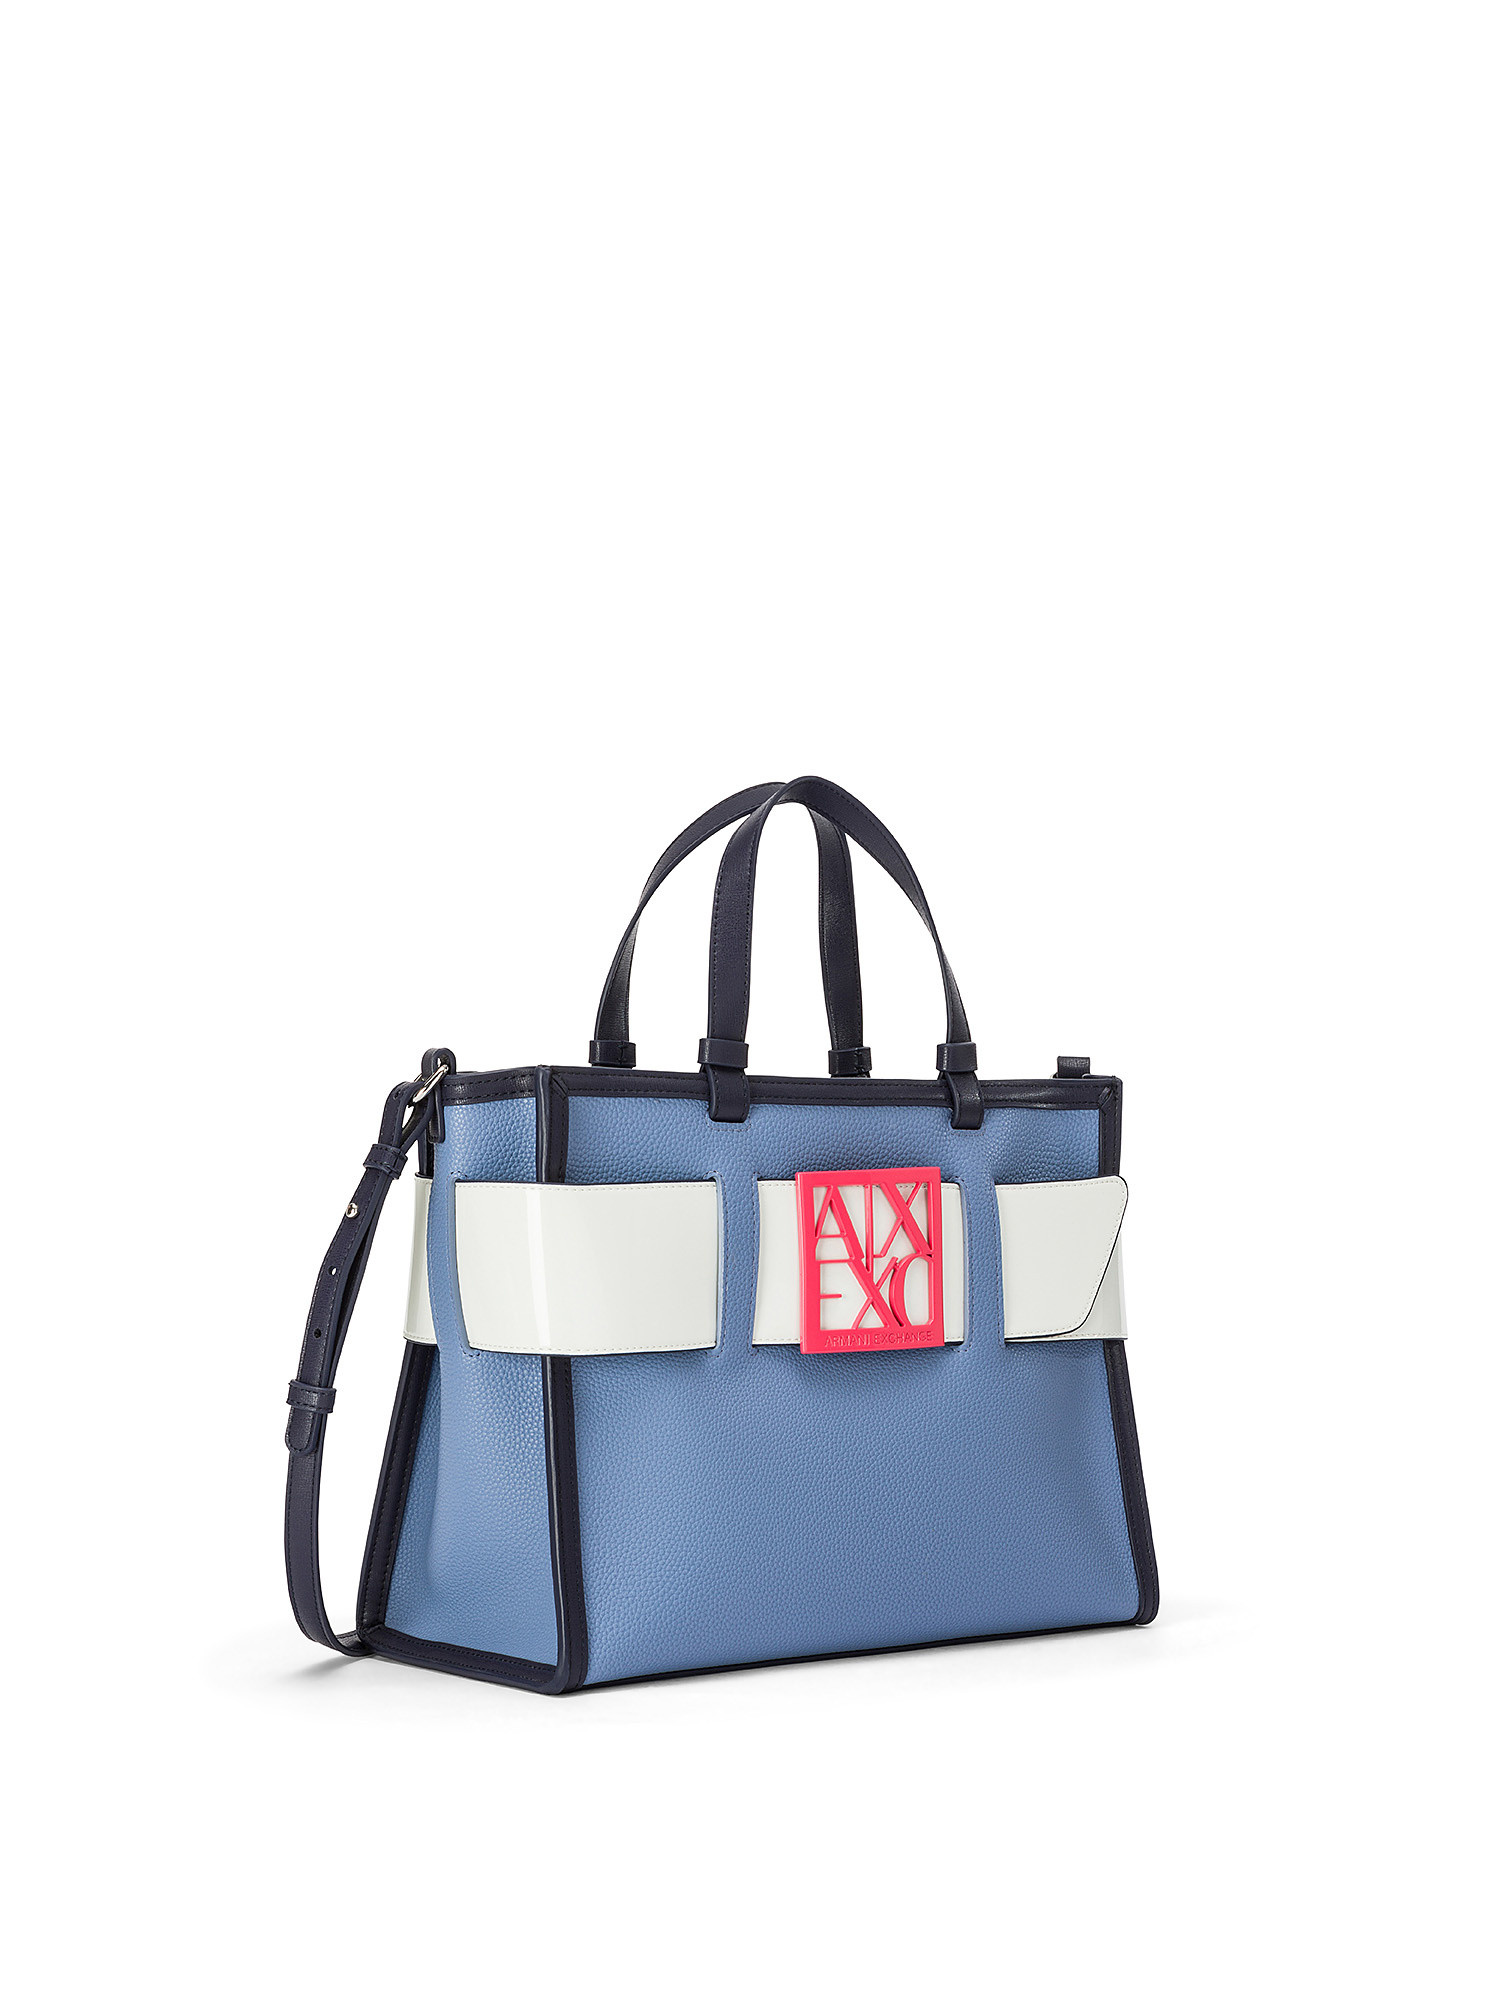 Armani Exchange - Tote bag grande con logo, Azzurro, large image number 1